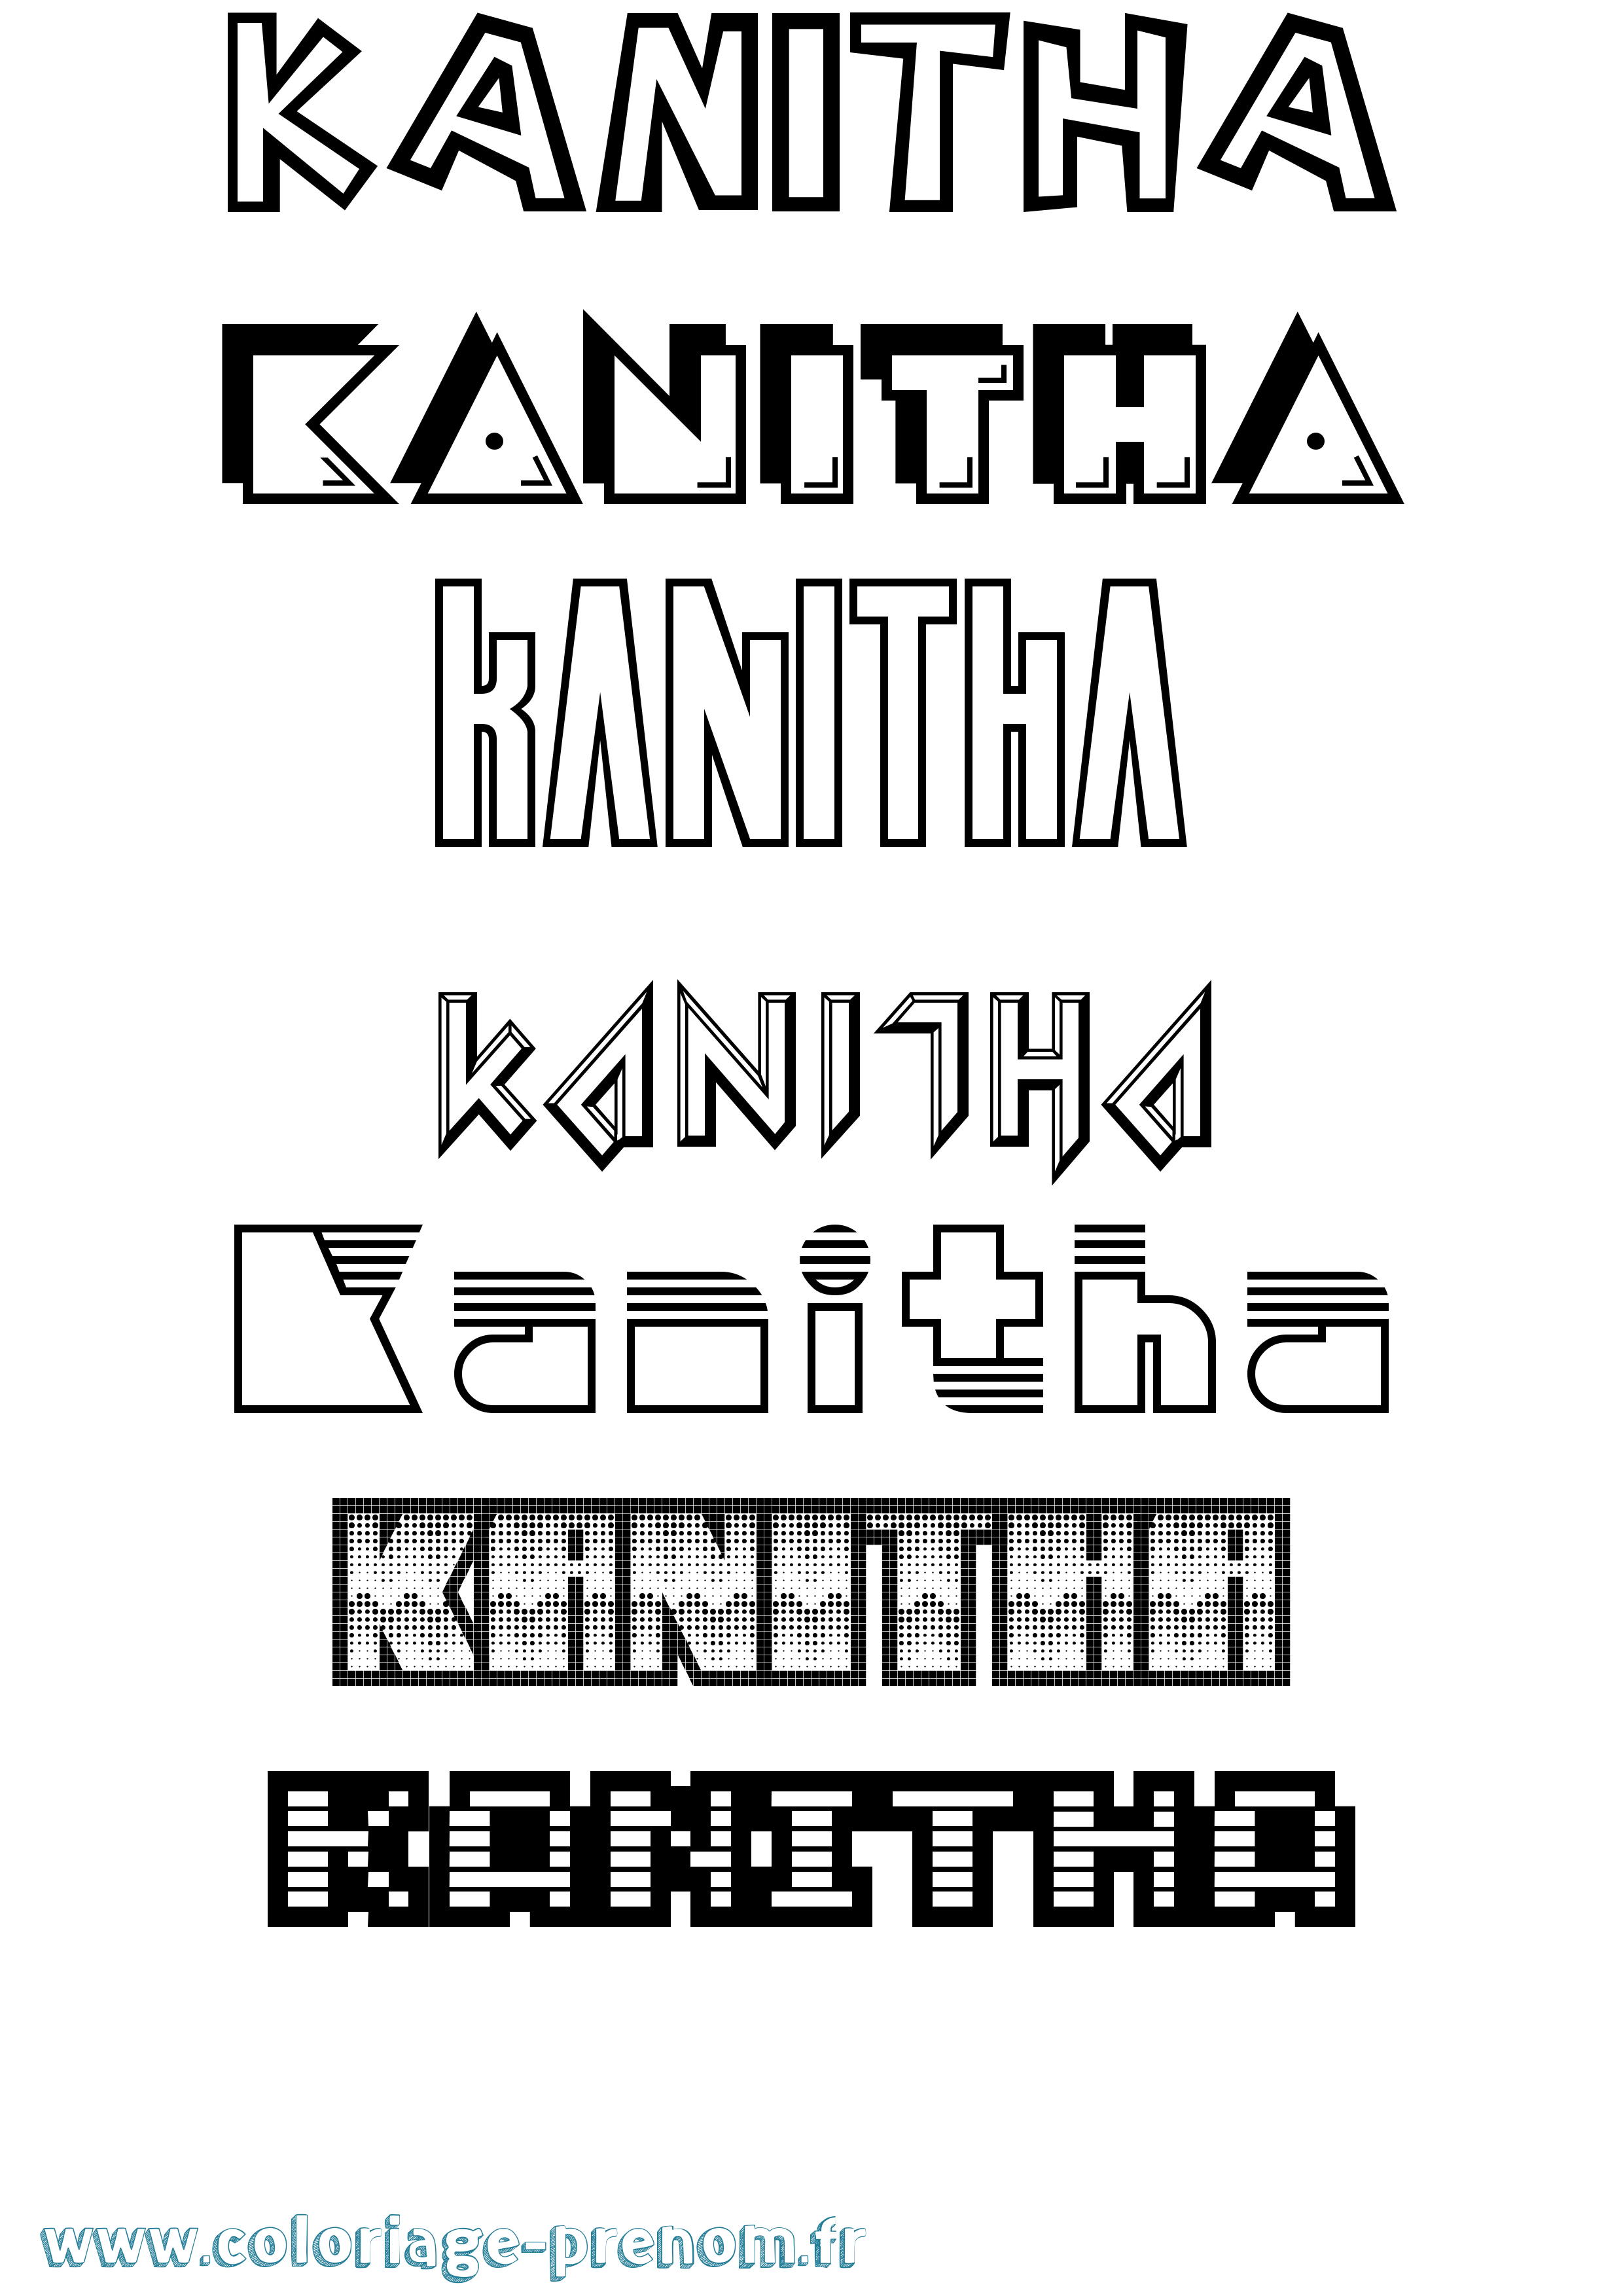 Coloriage prénom Kanitha Jeux Vidéos